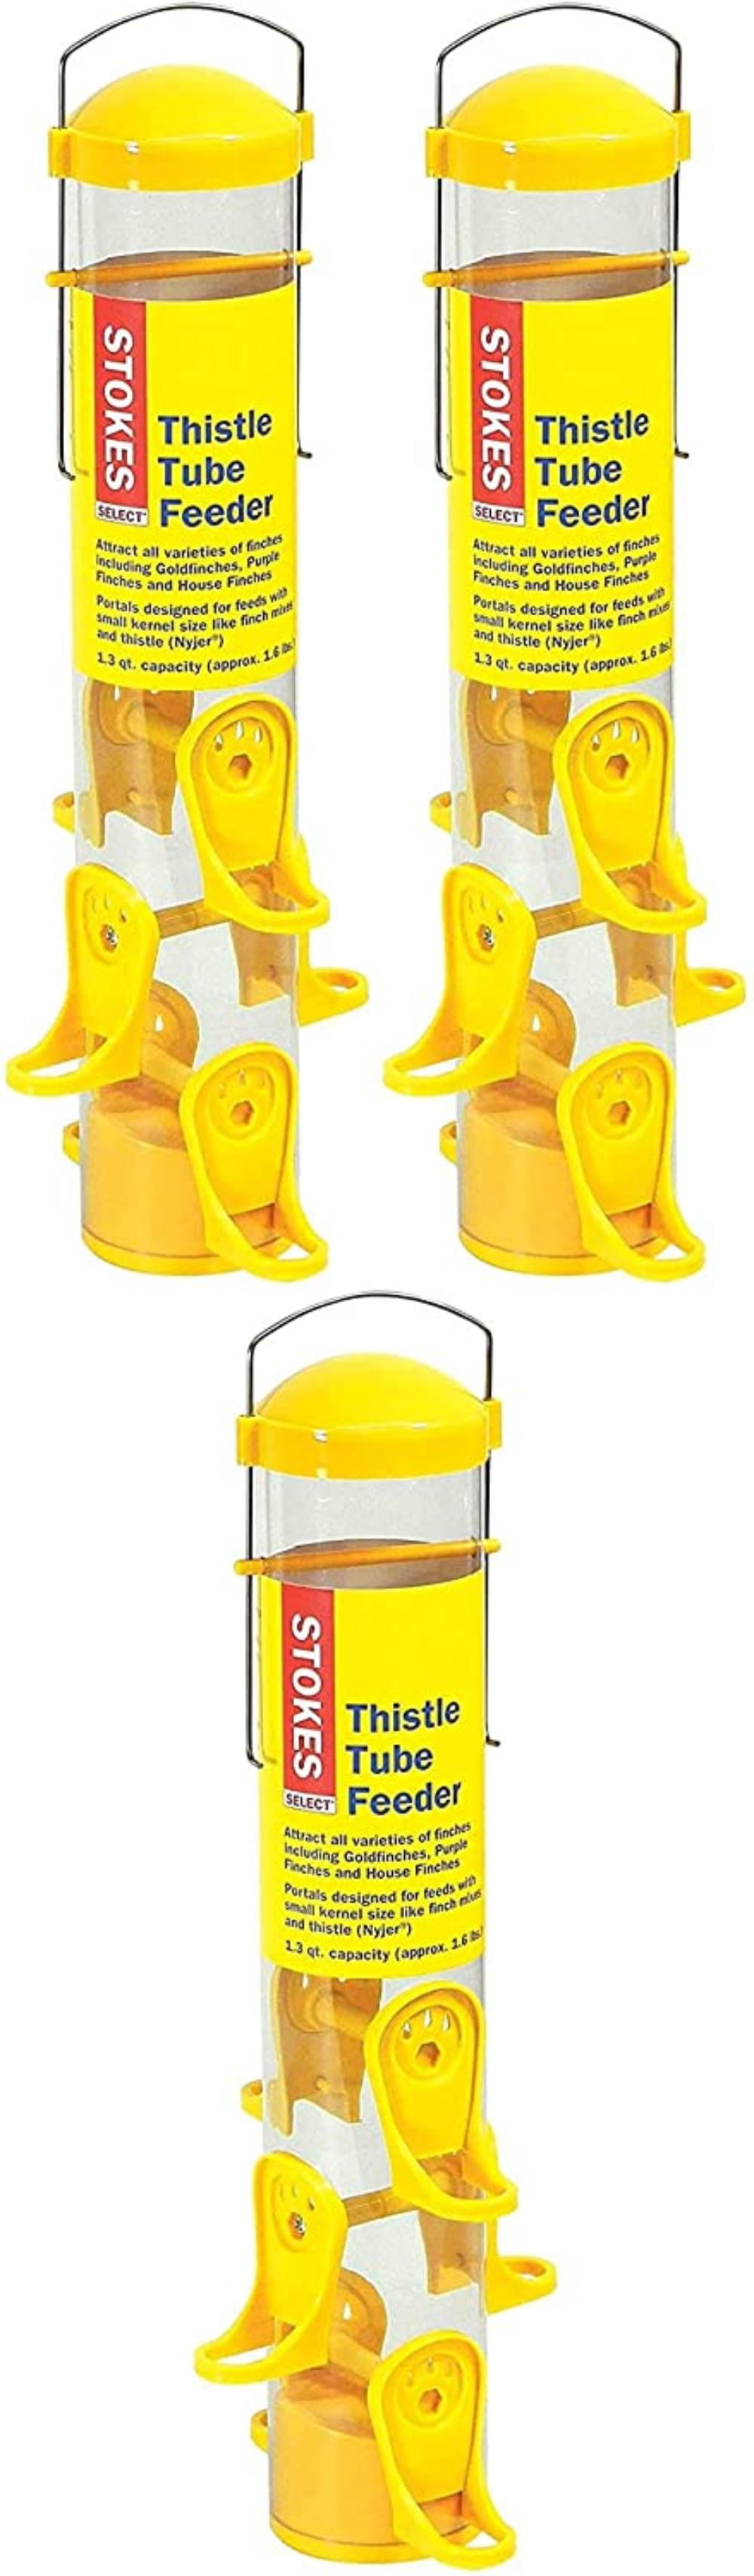 Stokes Thistle Tube Bird Feeder with Six Feeding Ports,Yellow,1.6lb Capacity 